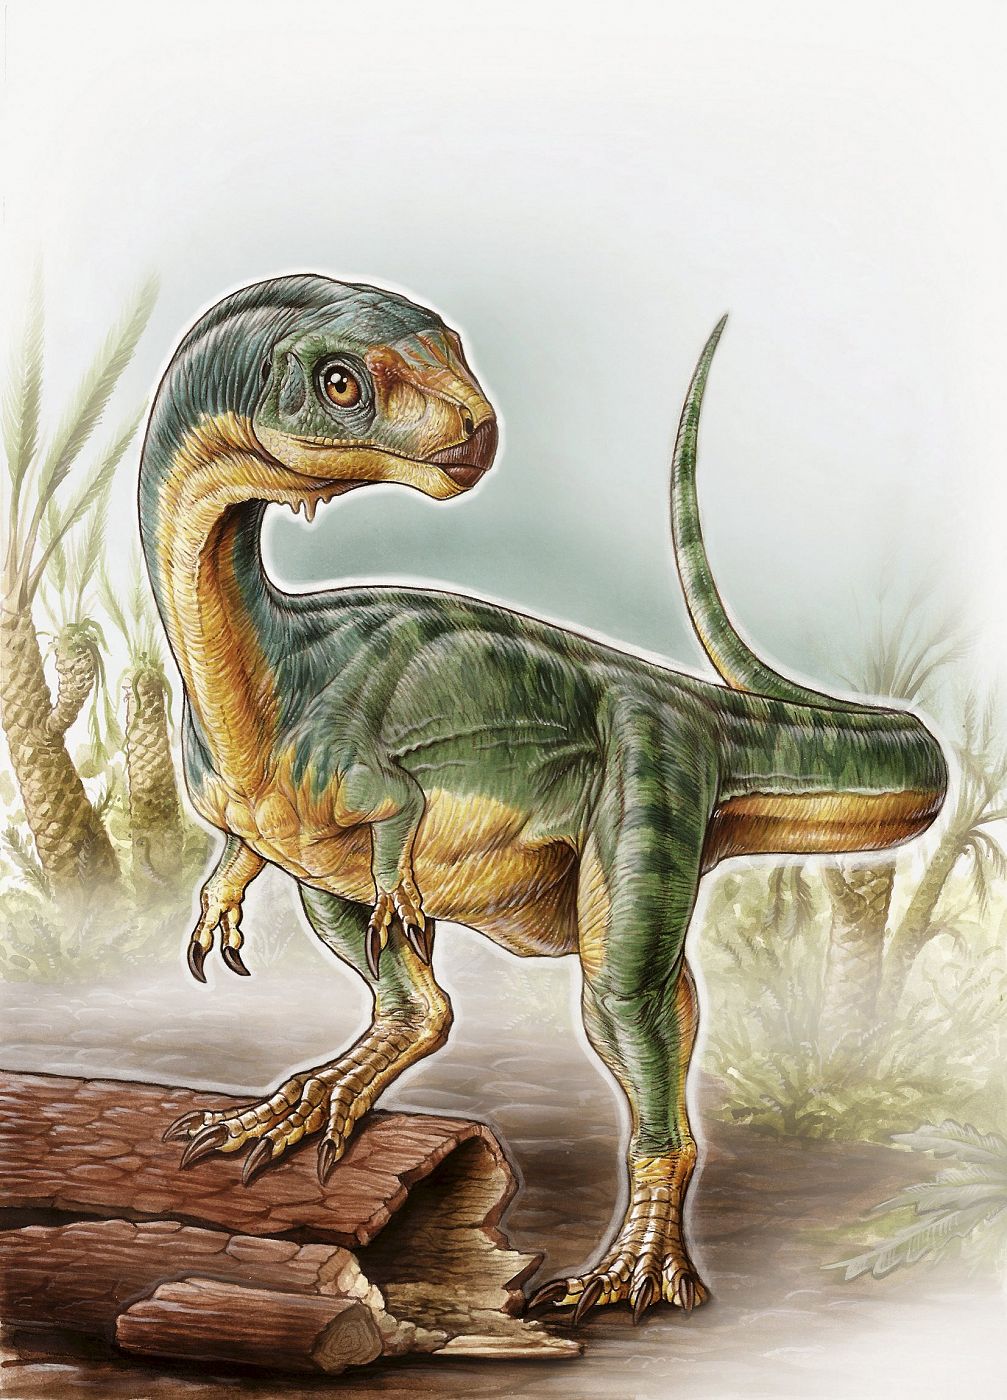 University of Birmingham handout illustration shows an artist's depiction of the Chilesaurus diegosuarezi